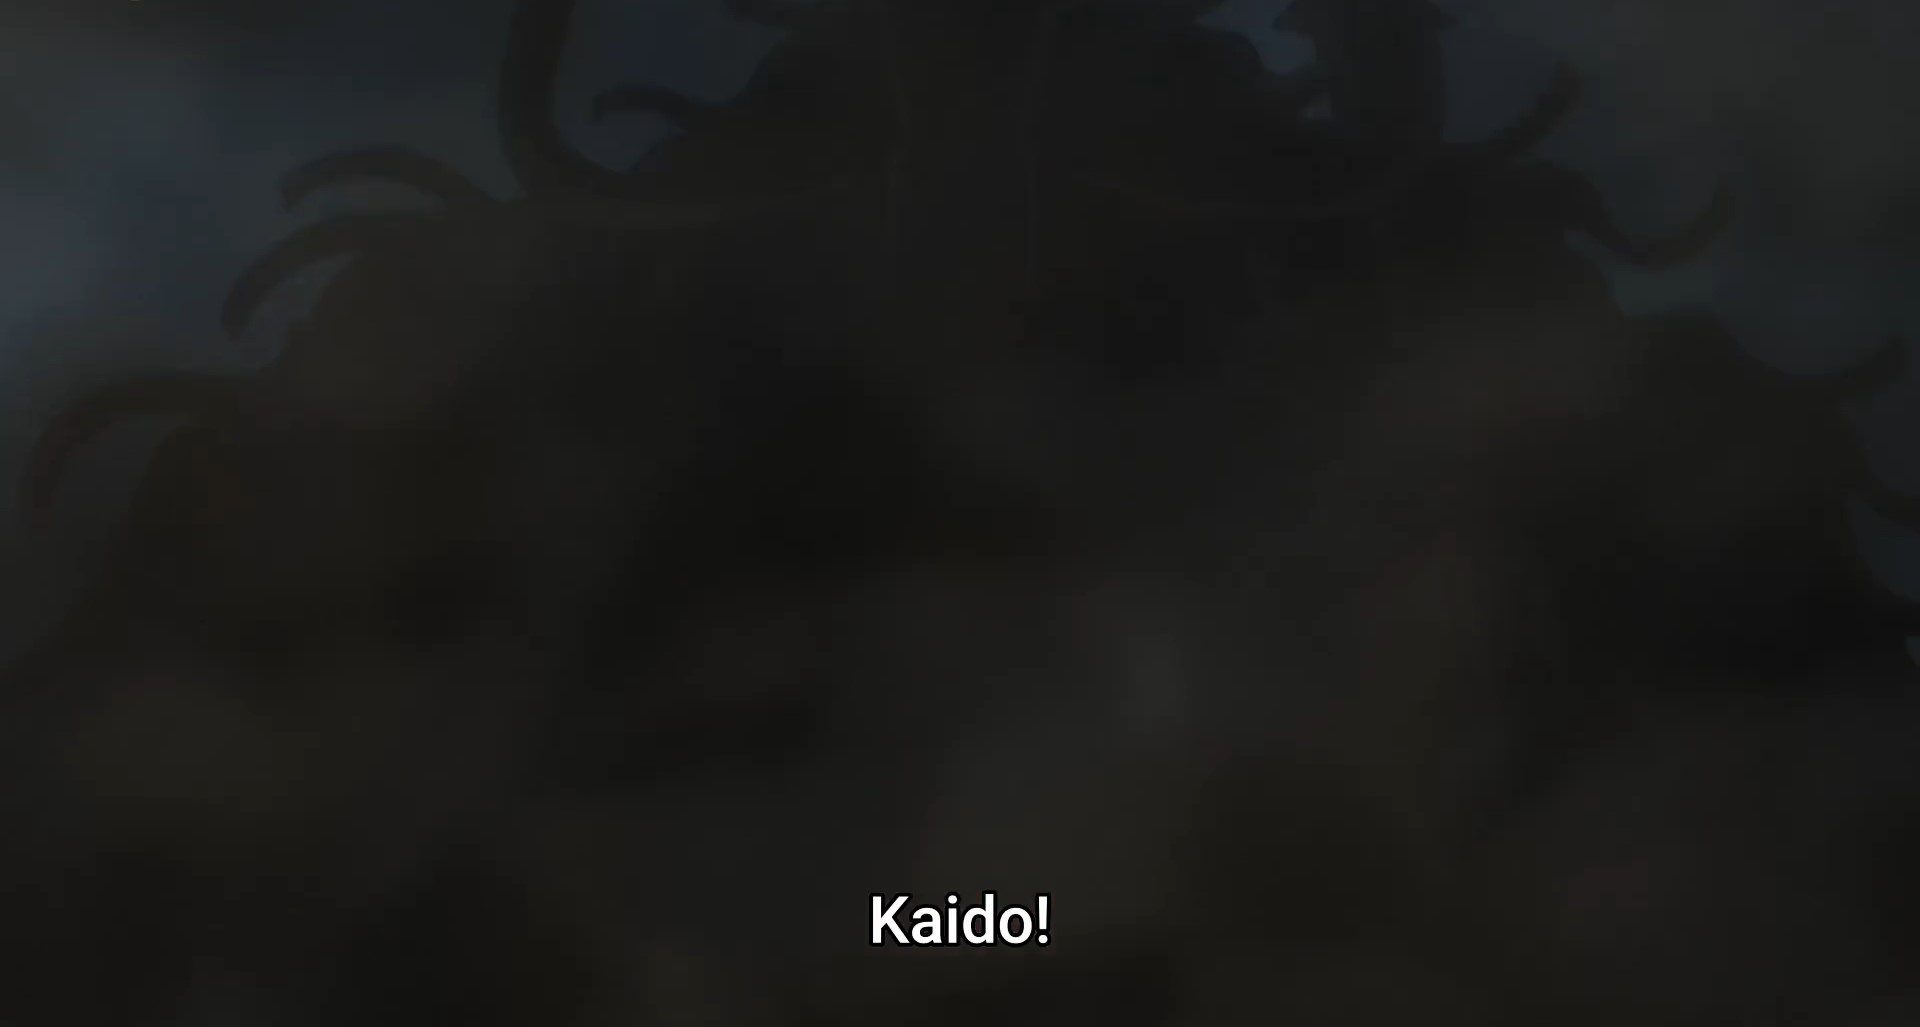 Man-Beast Form of Kaido